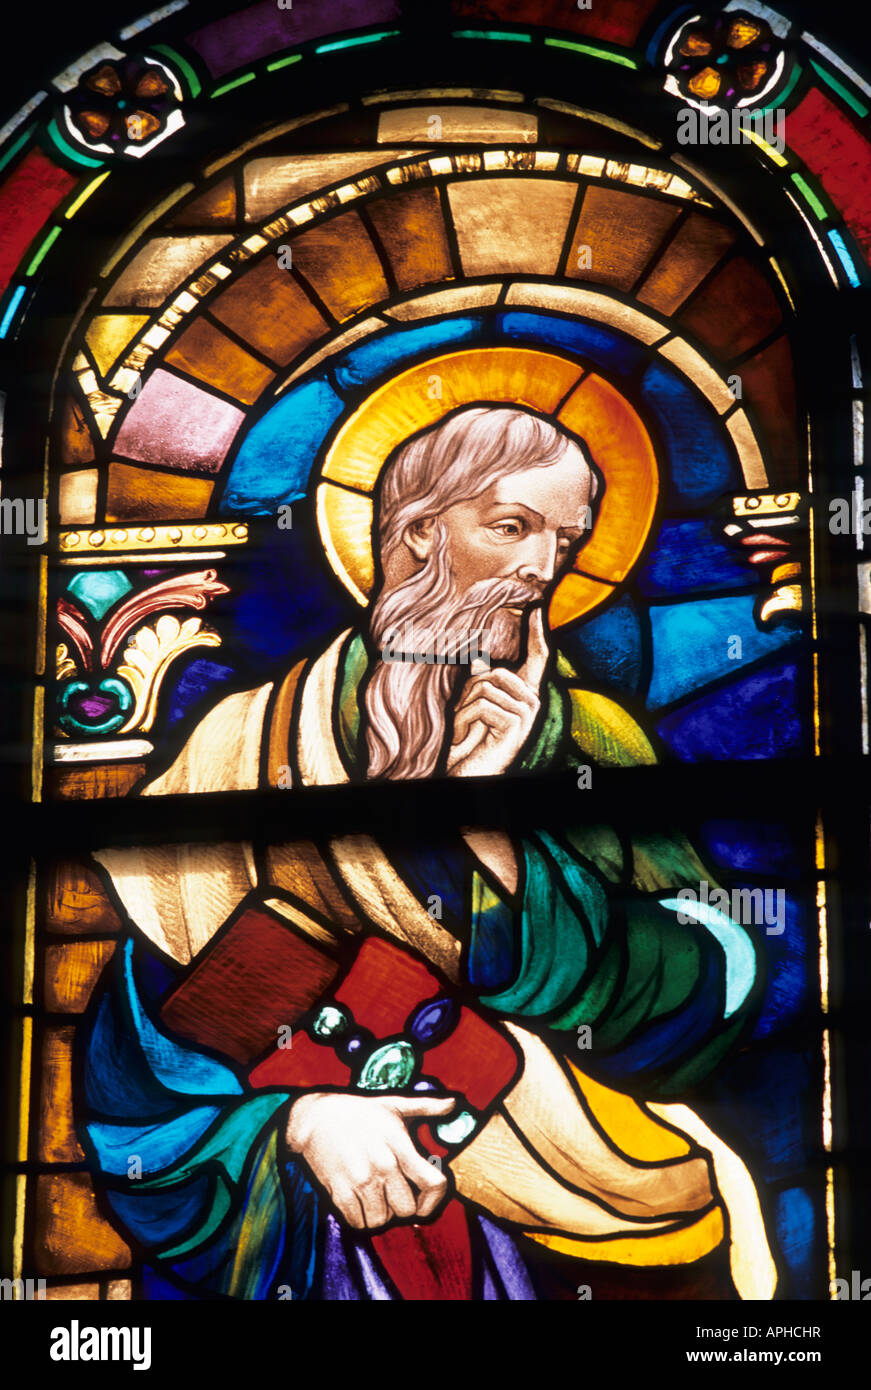 Beautiful Stained Glass Window In Saint Paul Cathedral St Paul Minnesota U S A Stock Photo Alamy